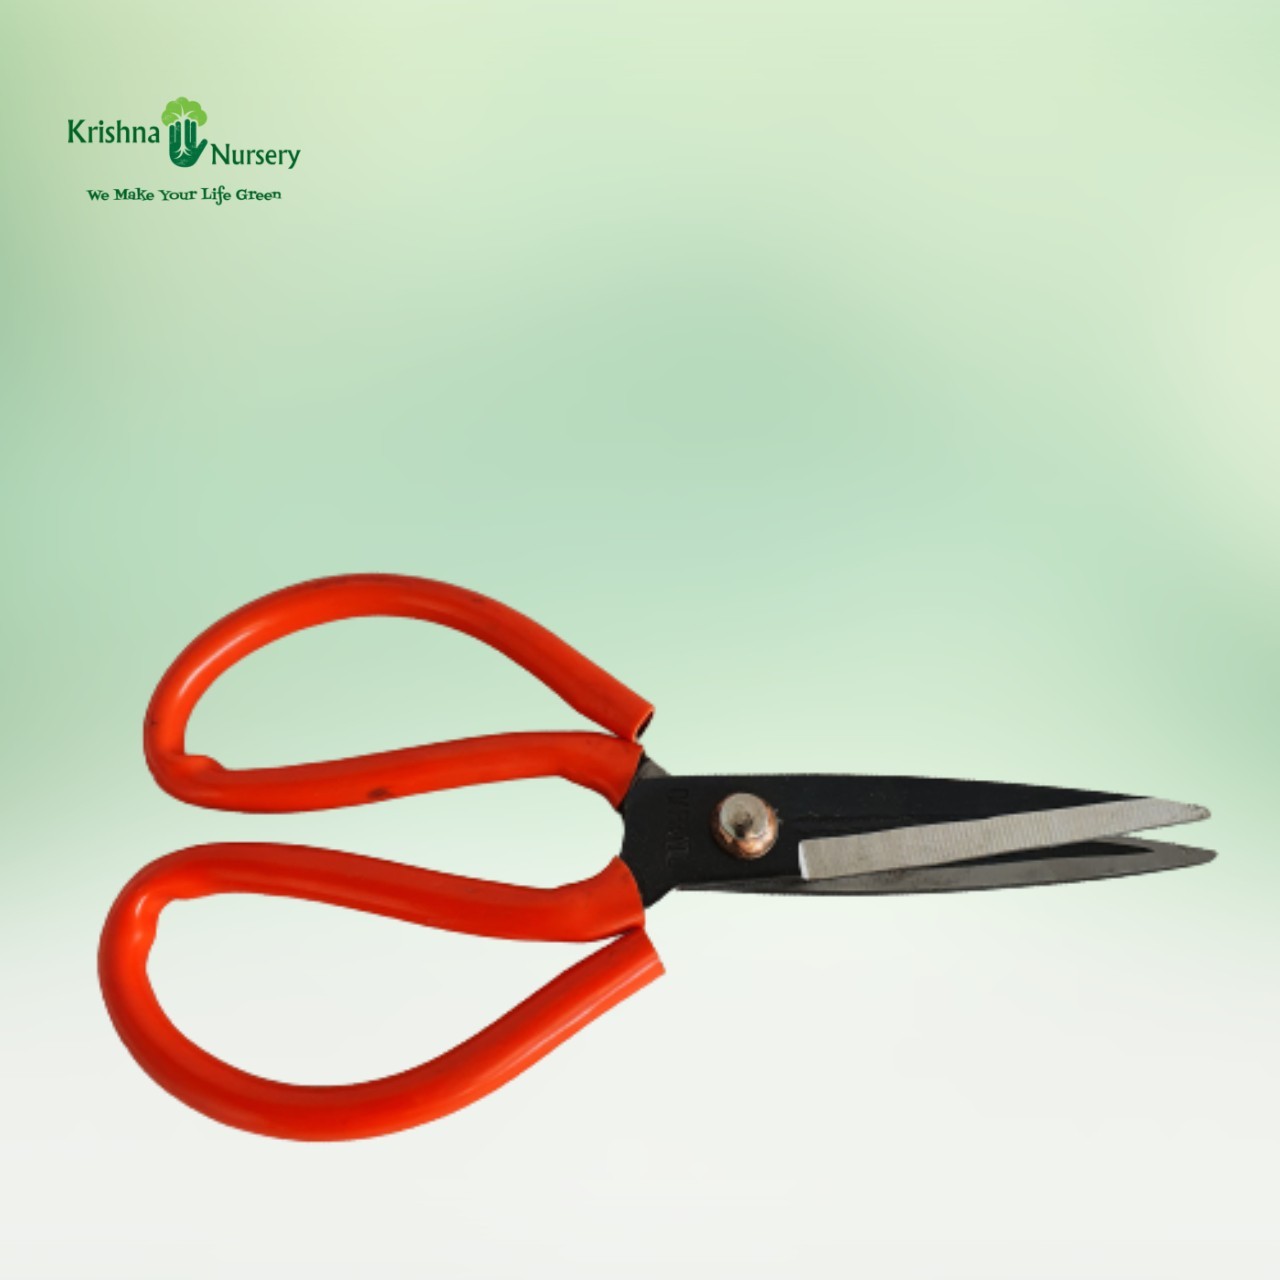 Small Scissors - Horticulture Tools -  - small-scissors -   